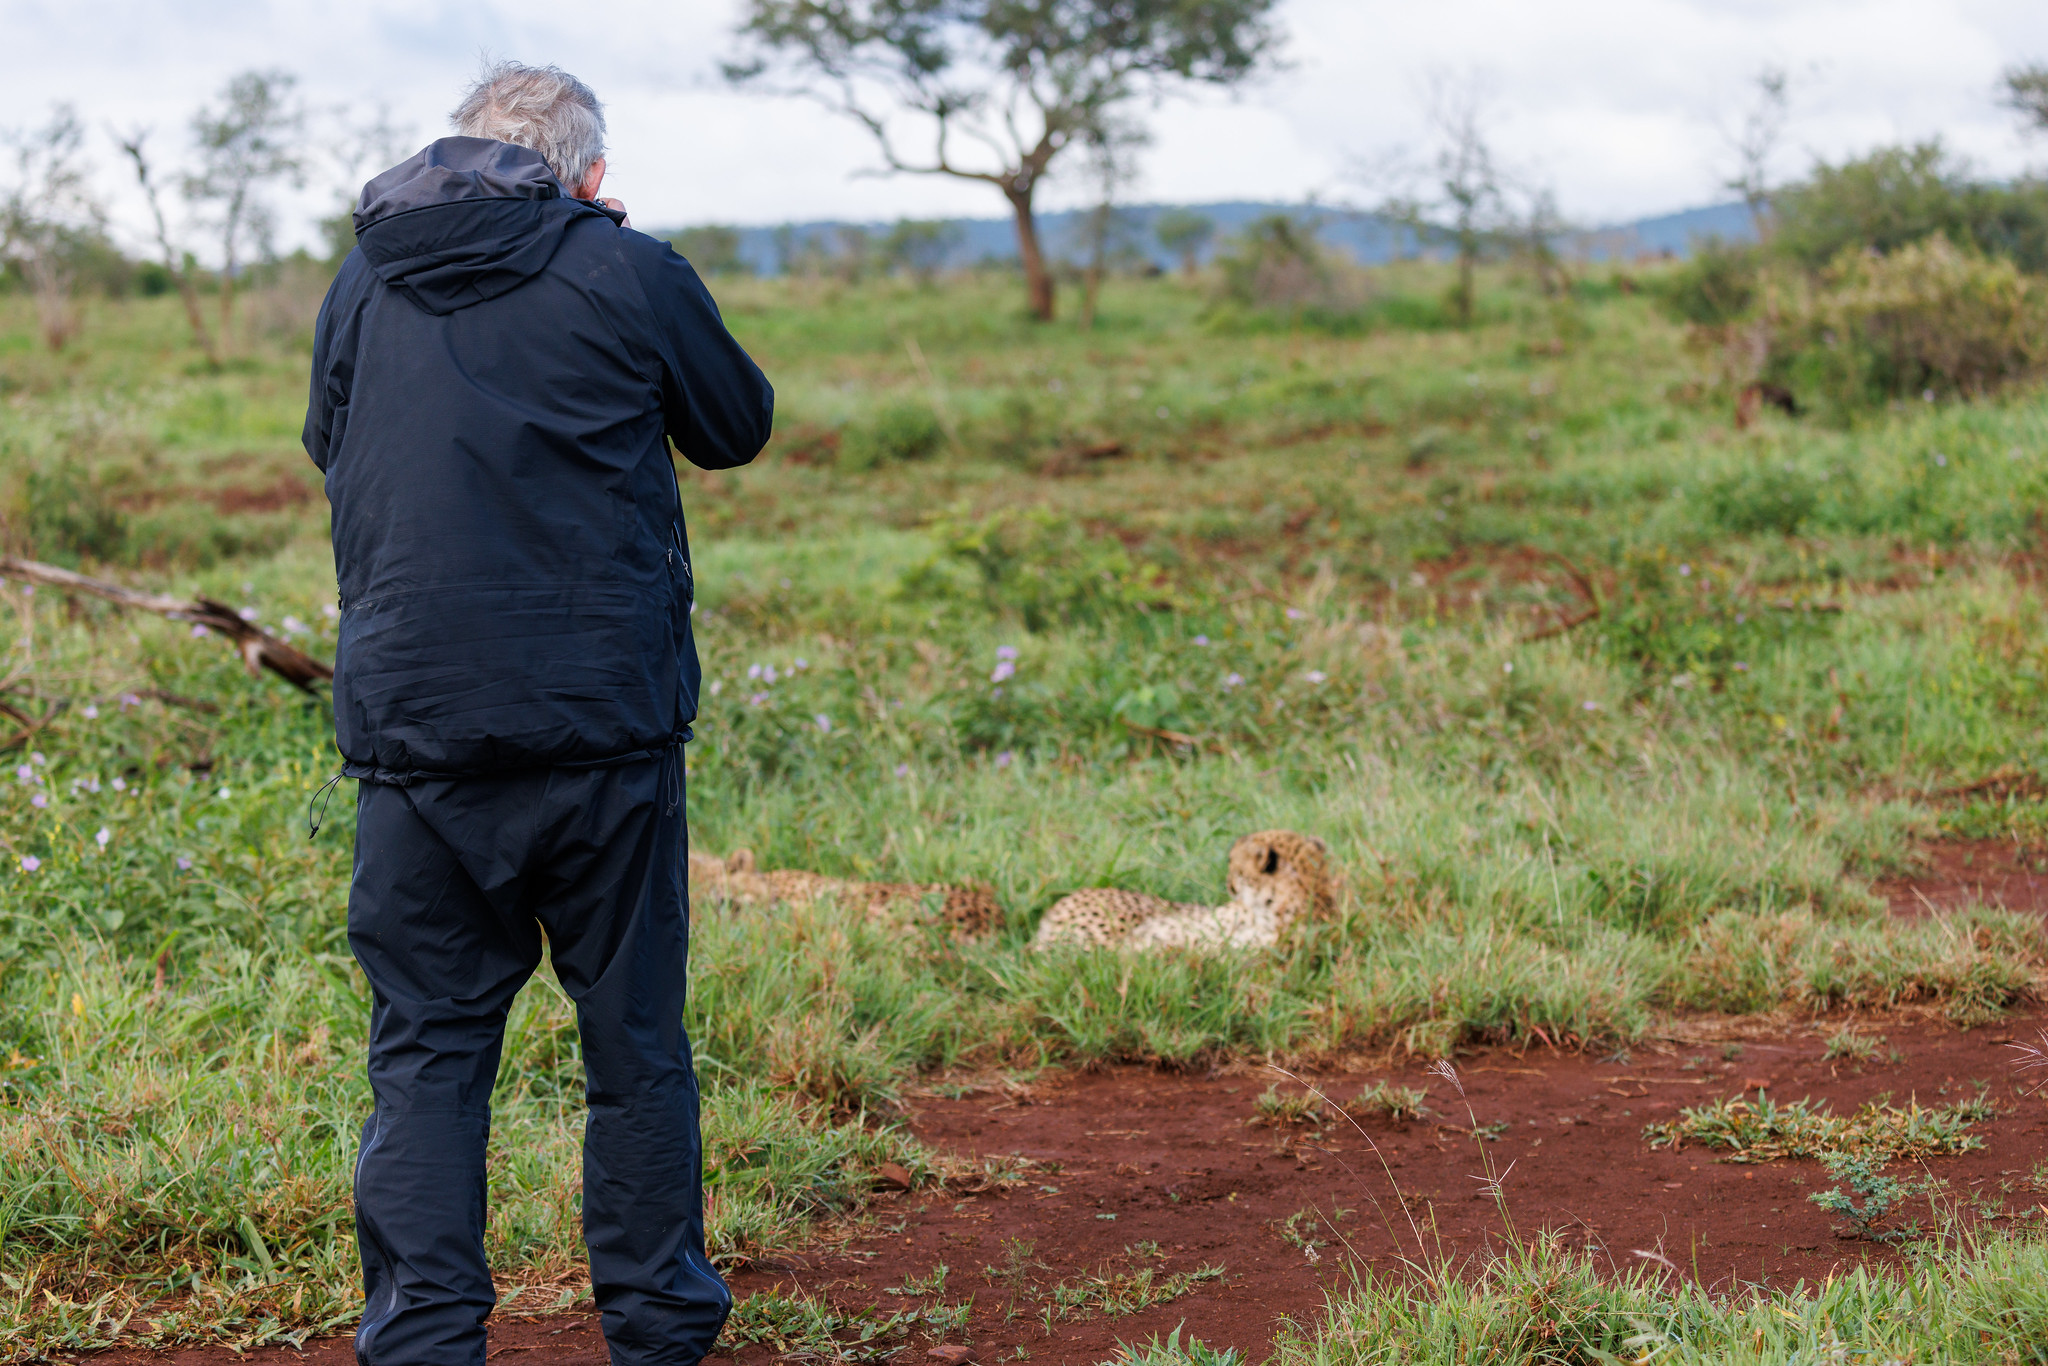 Cheetah photo on foot - Zimanga, South Africa